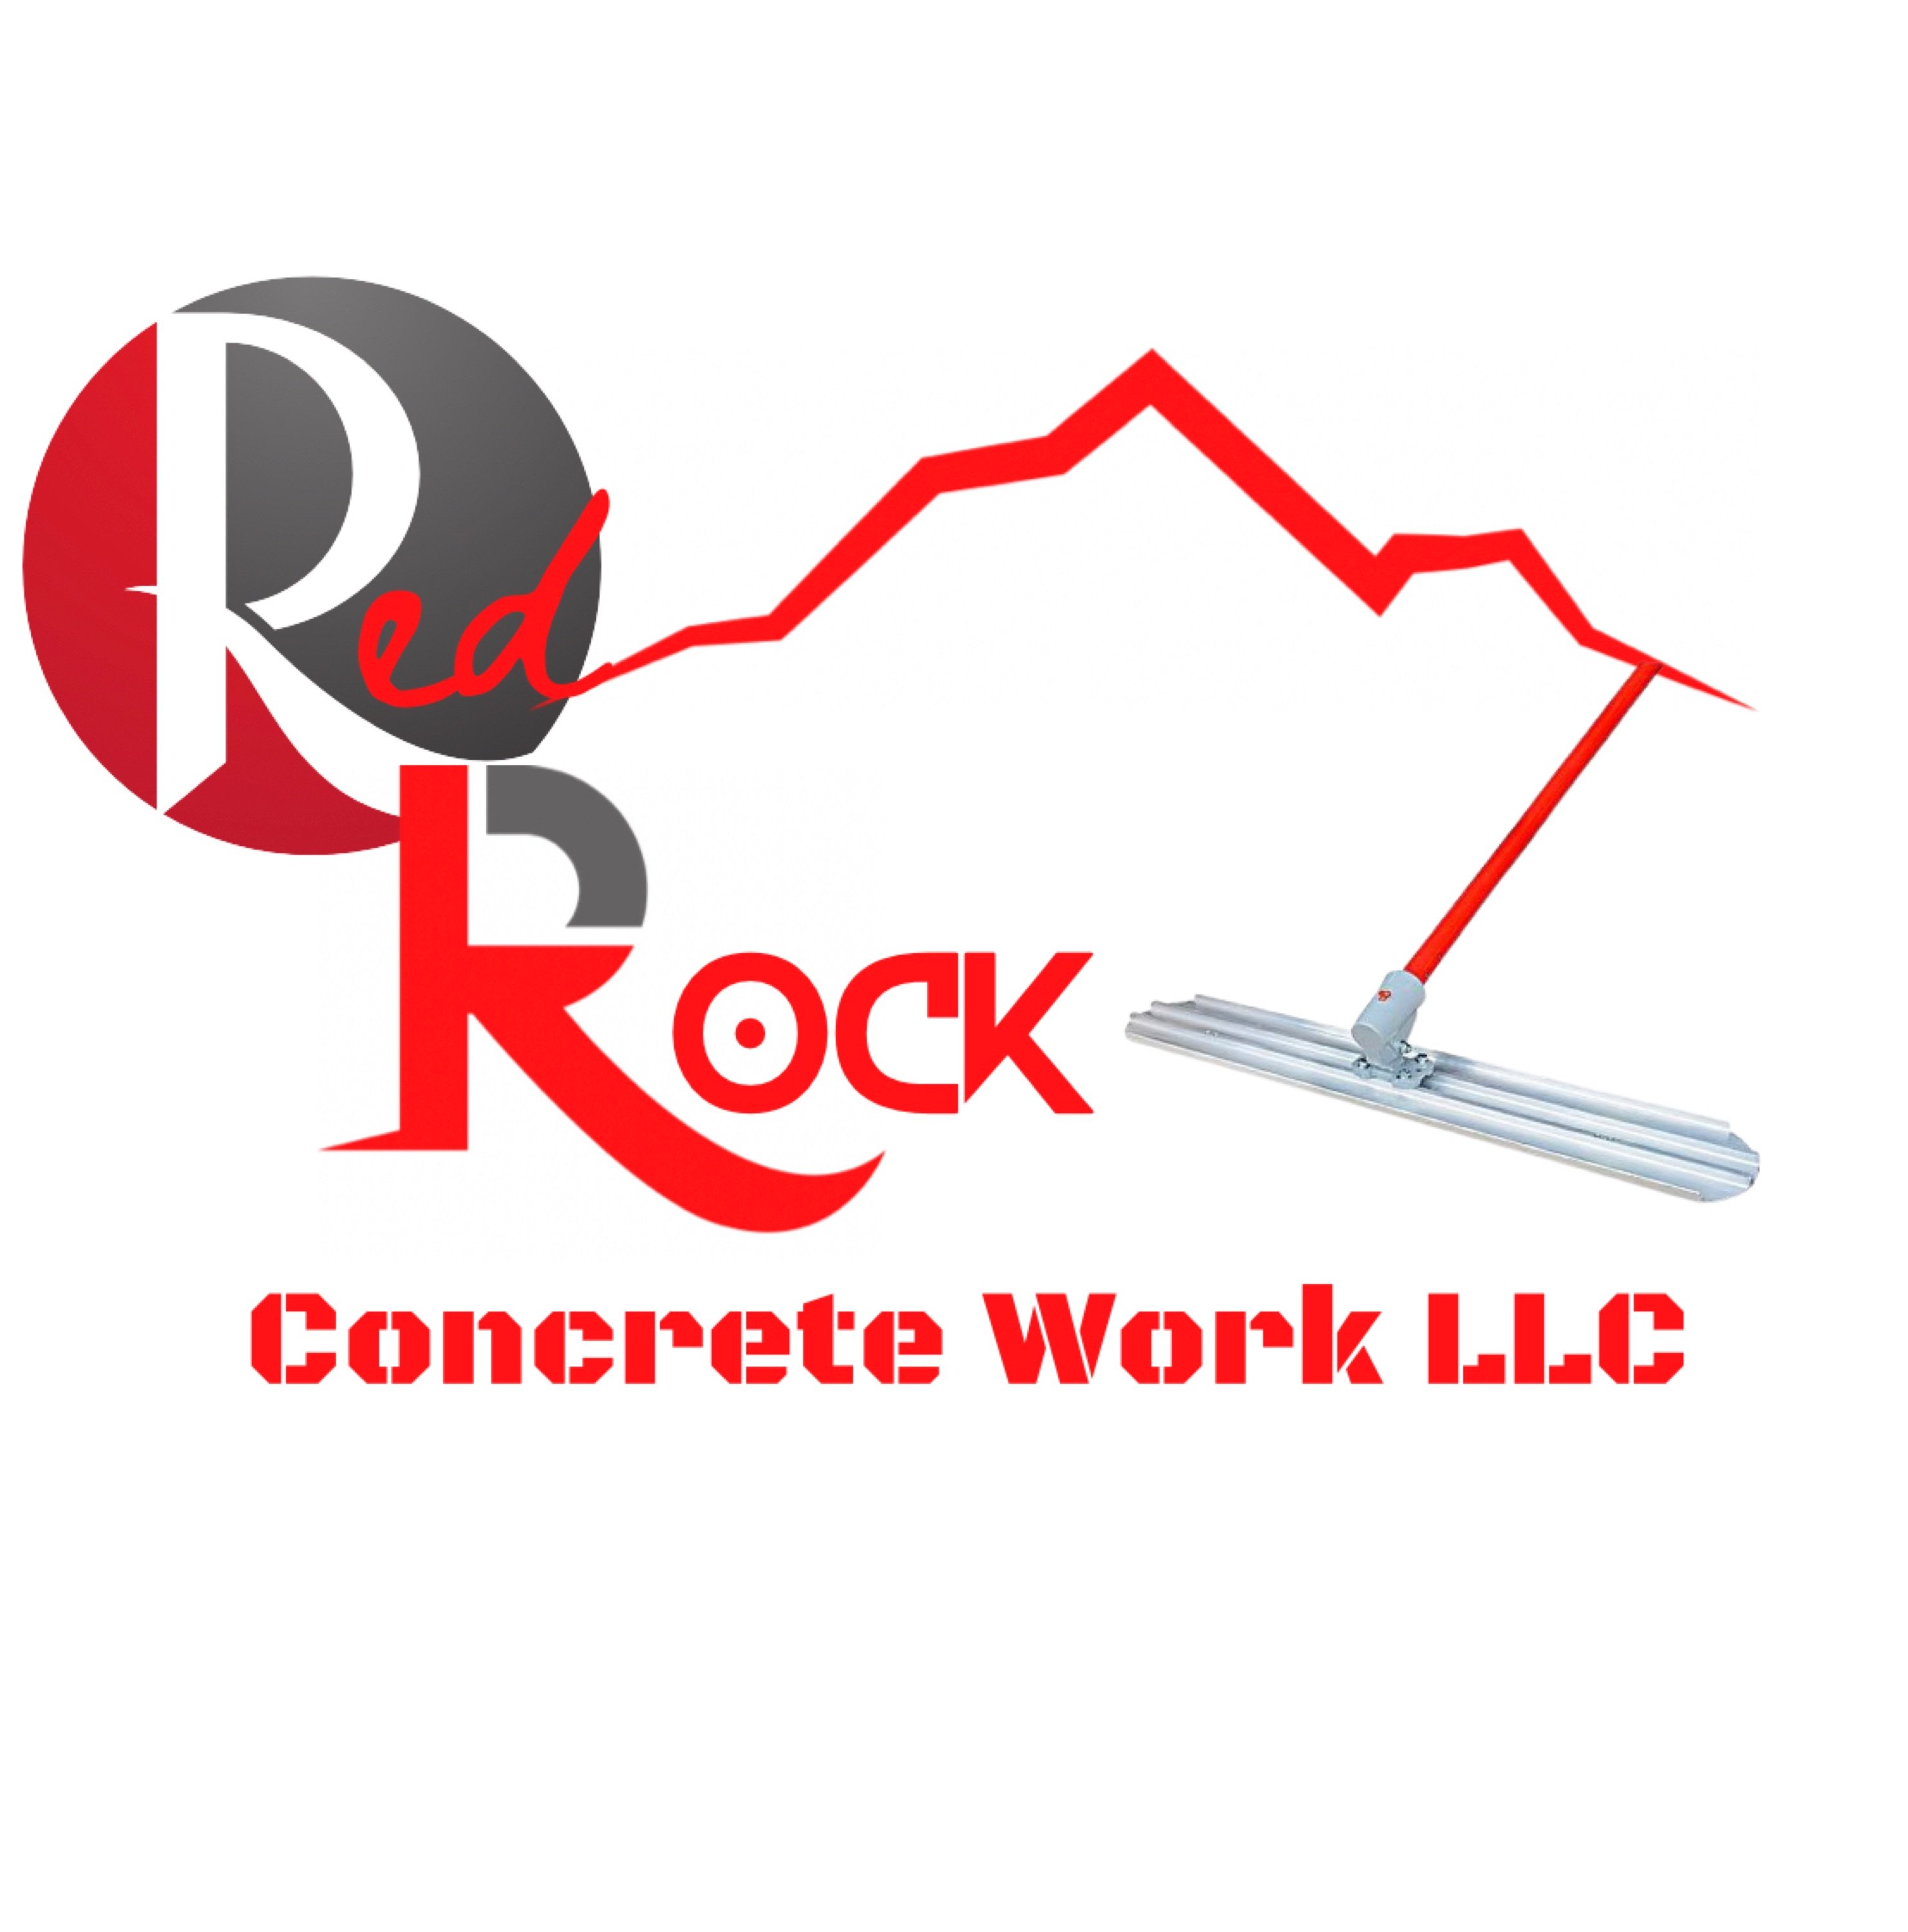 Red Rock Concrete Work, LLC Logo